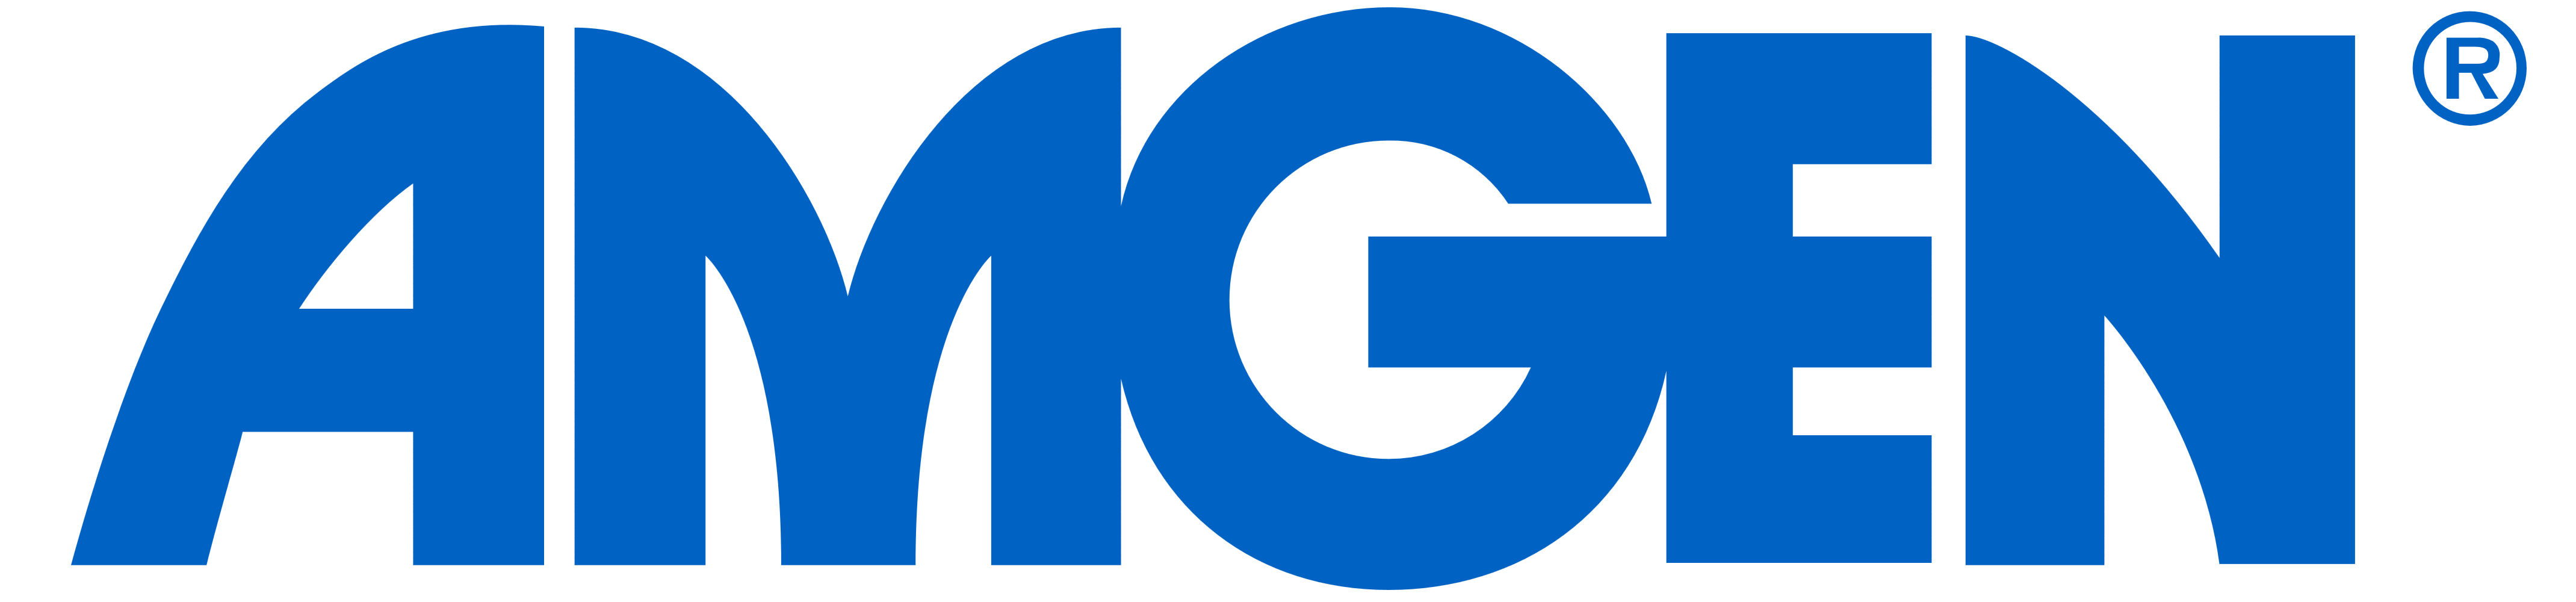 Amgen_logo_logotype